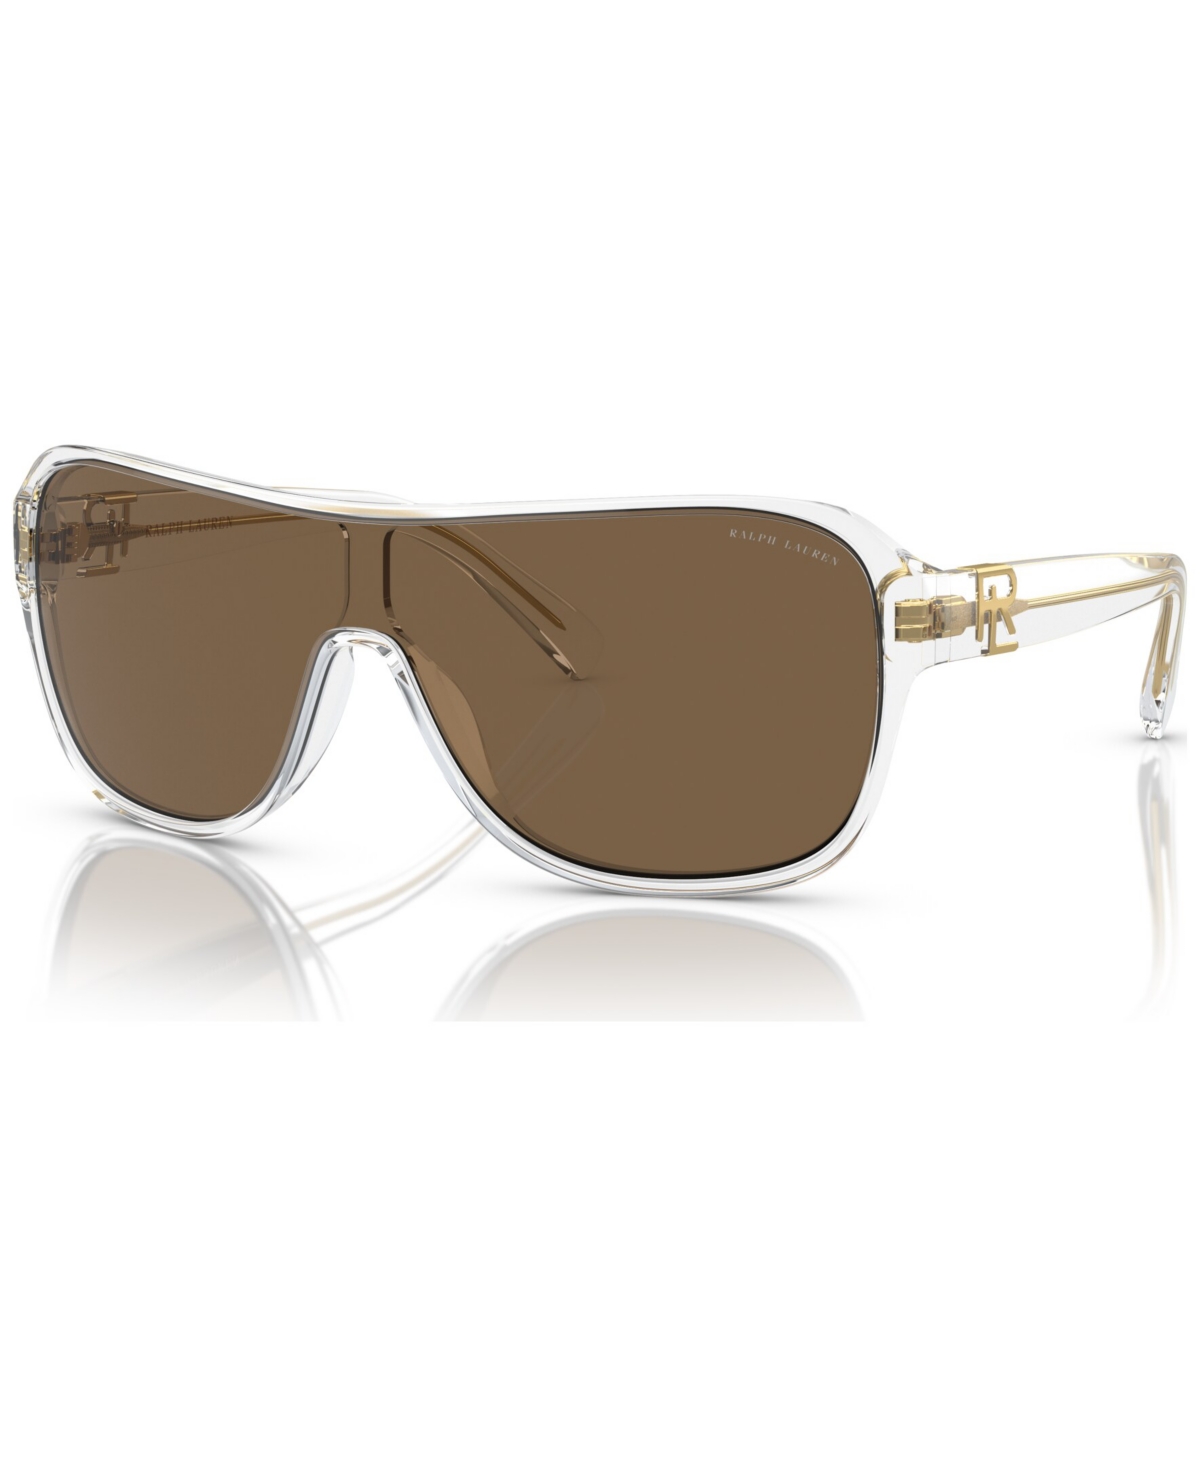 Ralph Lauren Women's Sunglasses, The Dillion In Brown